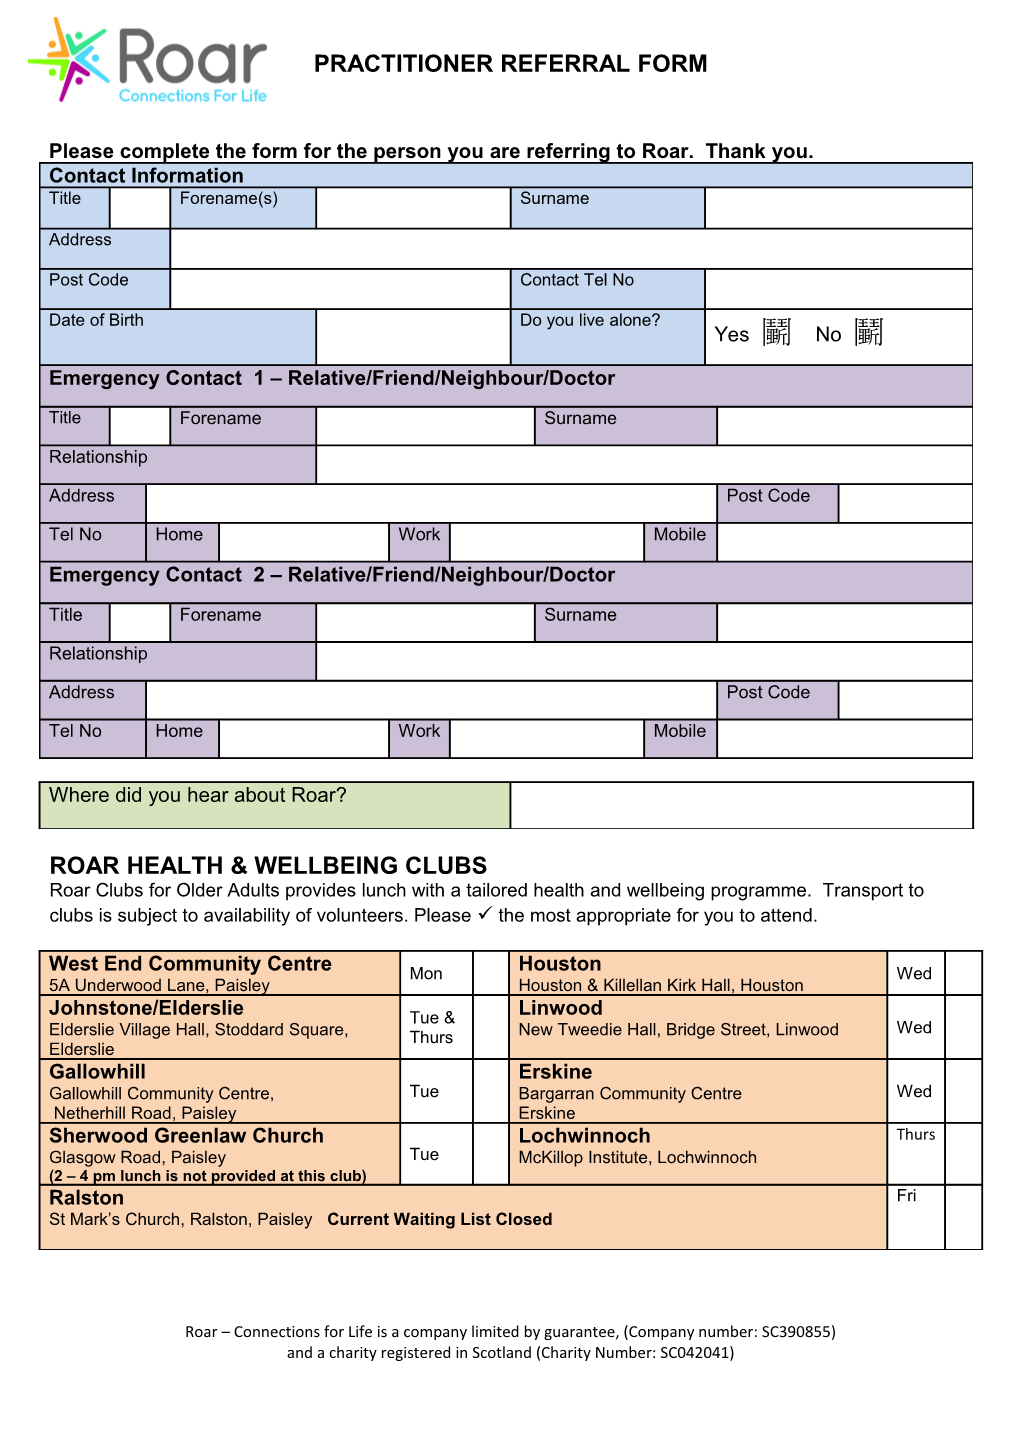 Roar Health & Wellbeing Clubs